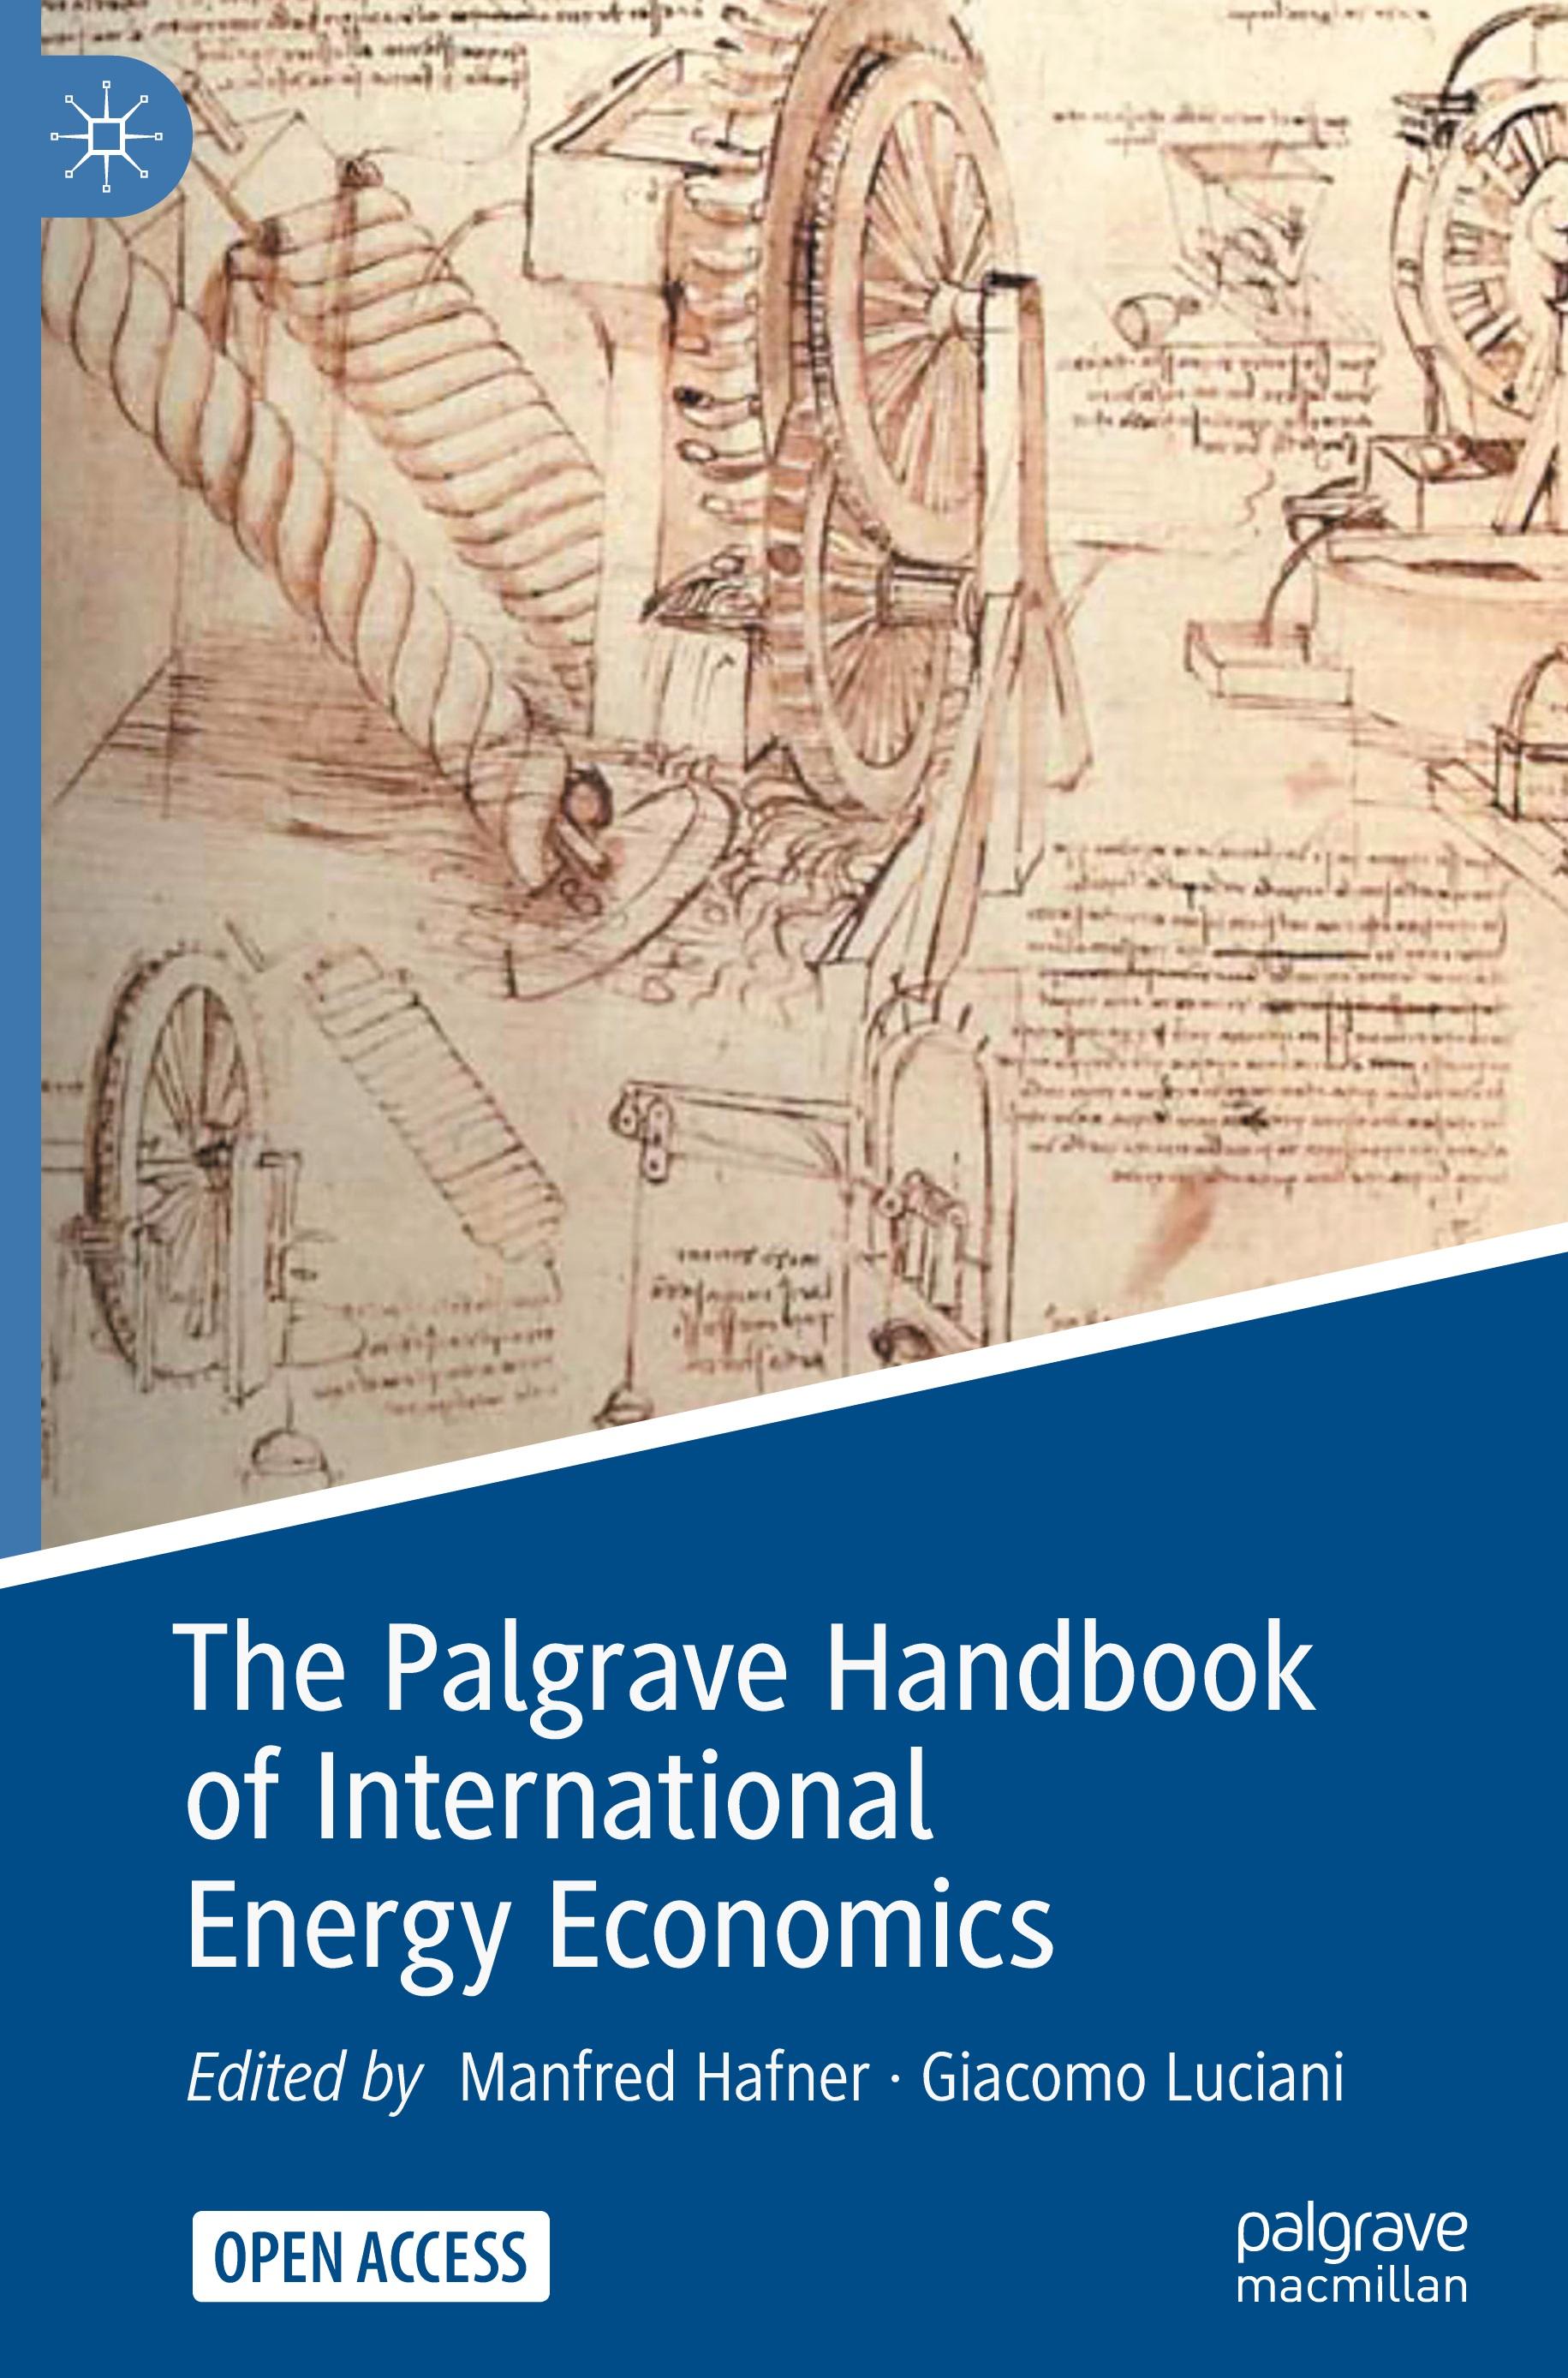 The Palgrave Handbook of International Energy Economics